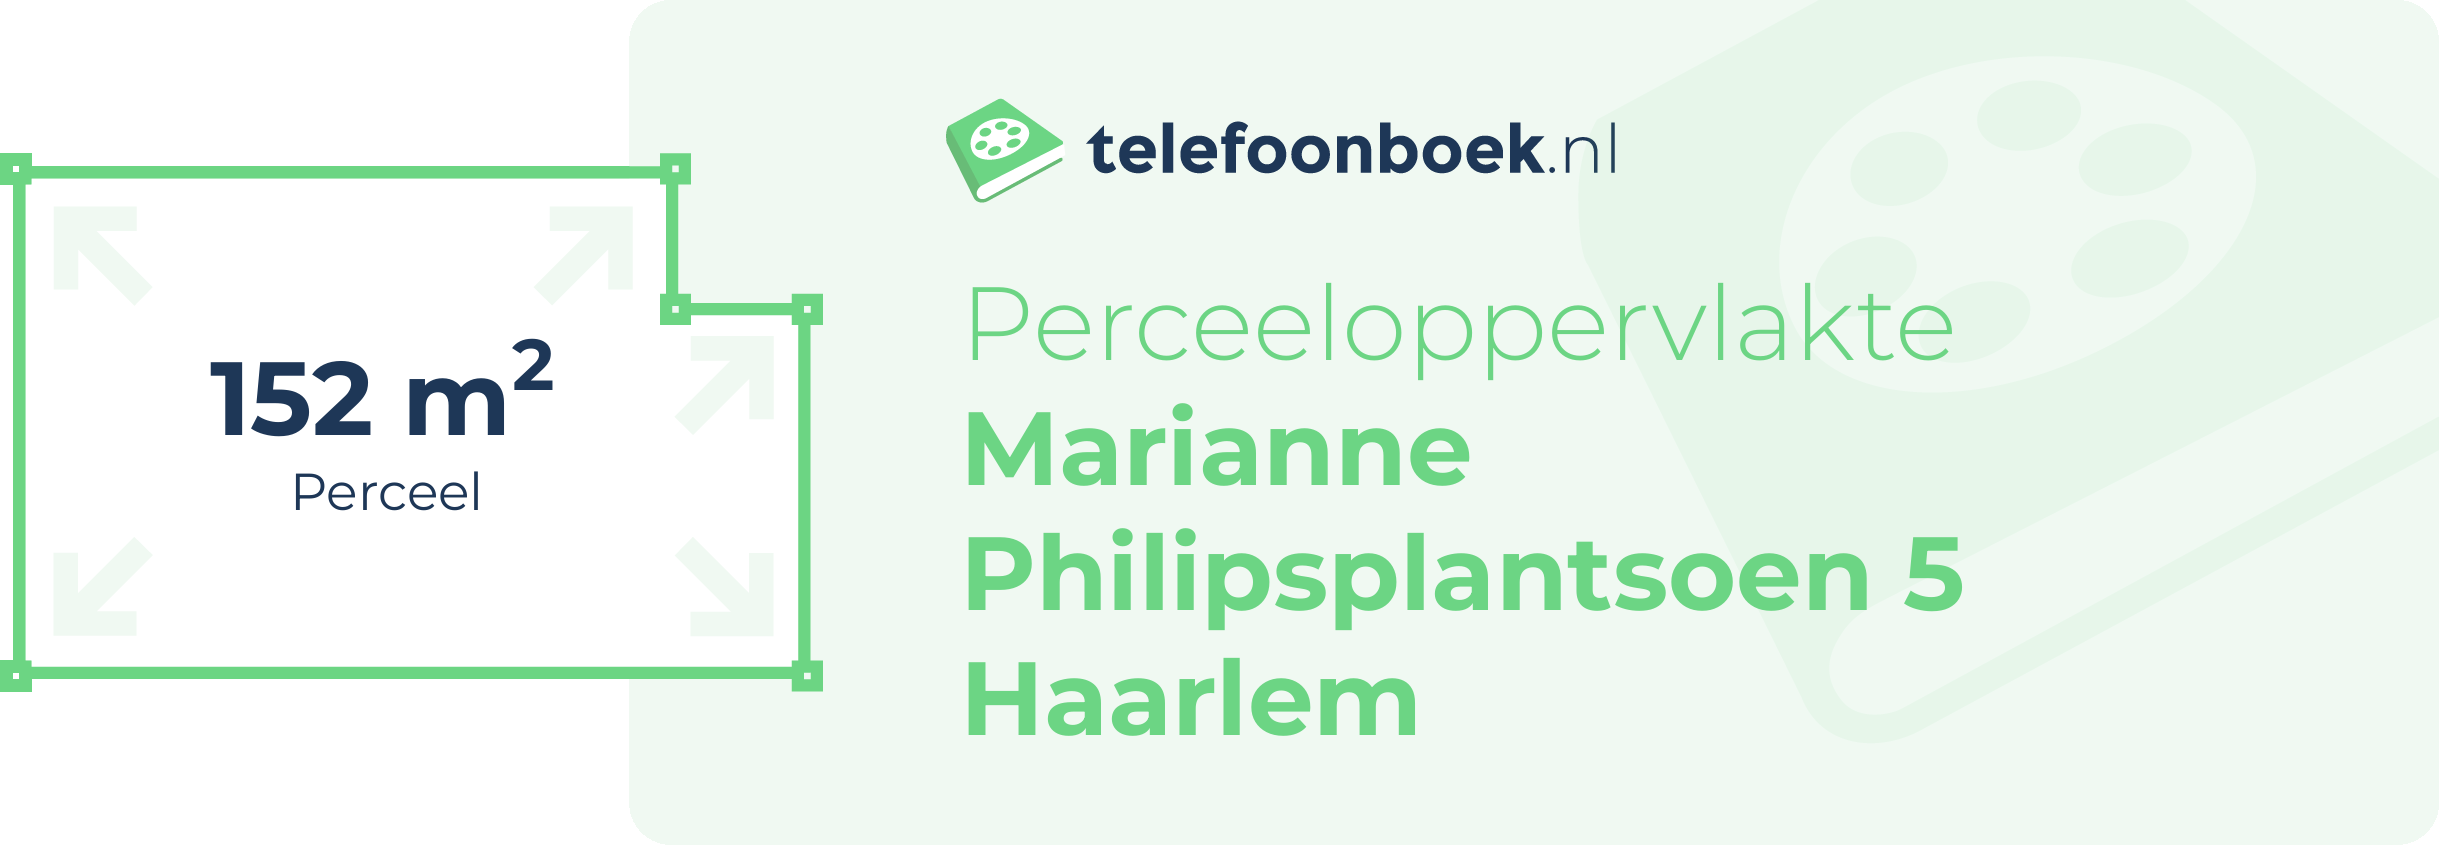 Perceeloppervlakte Marianne Philipsplantsoen 5 Haarlem